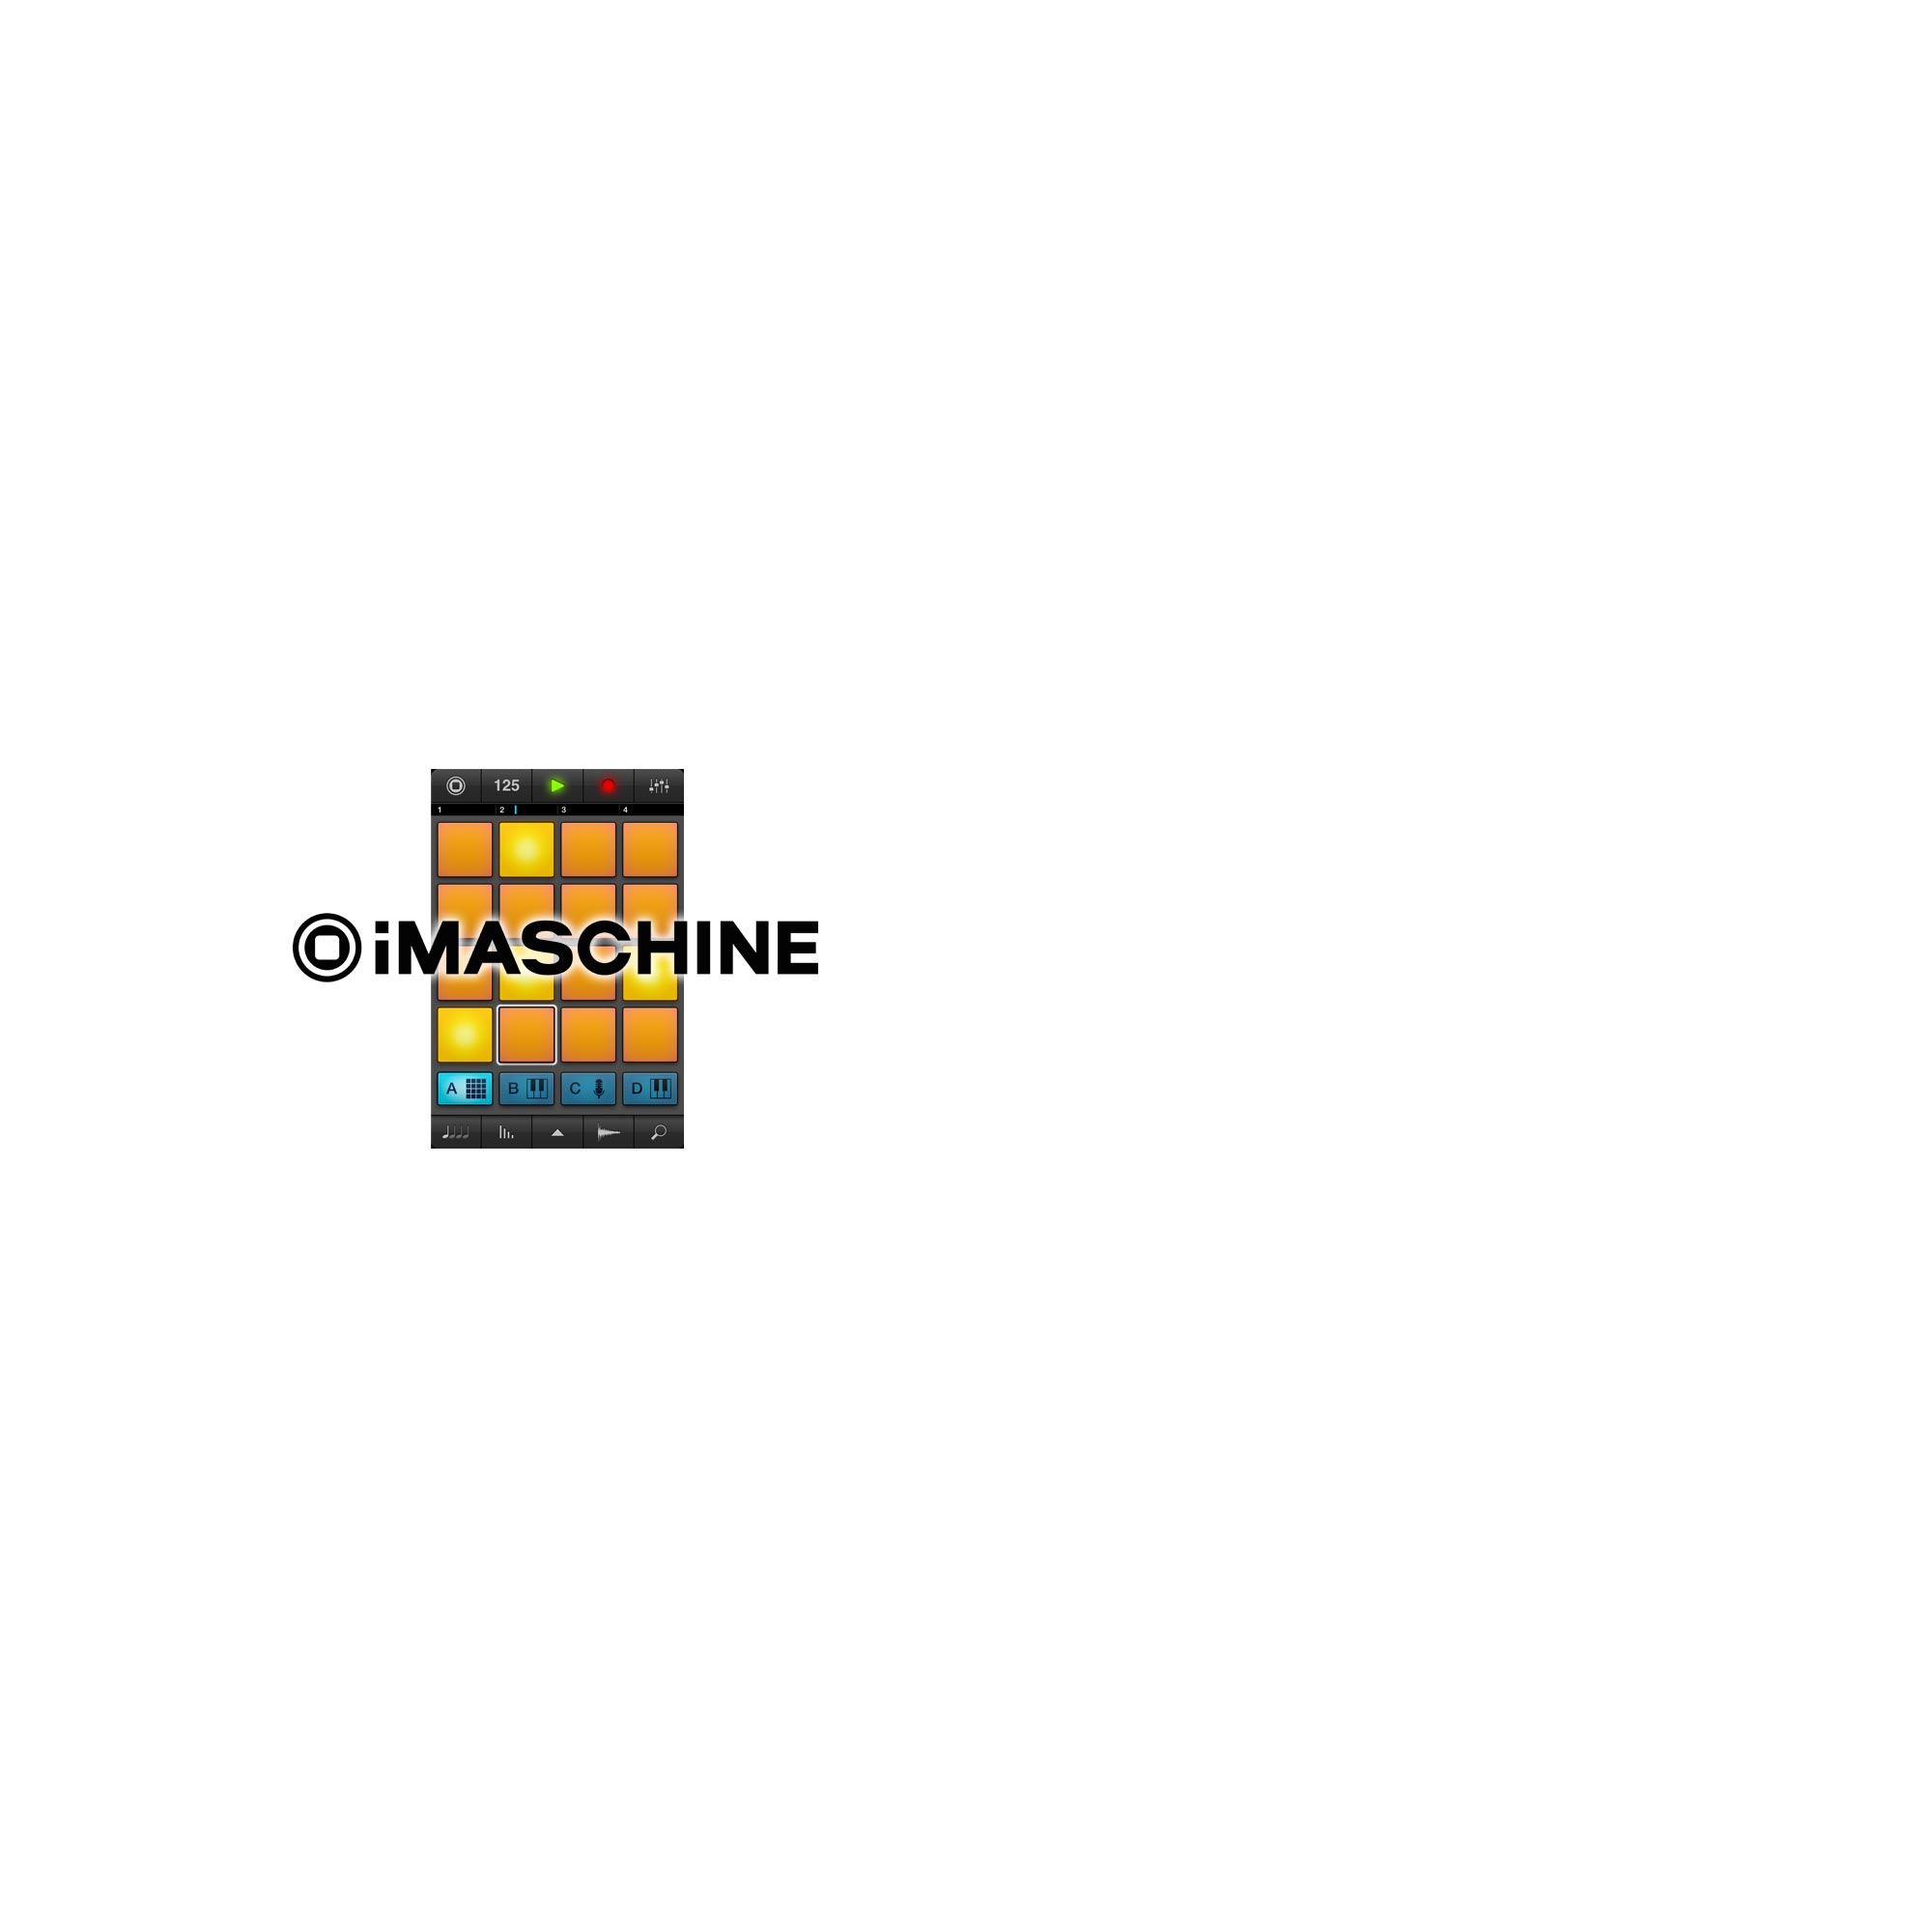 Native Instruments Releases iMaschine App